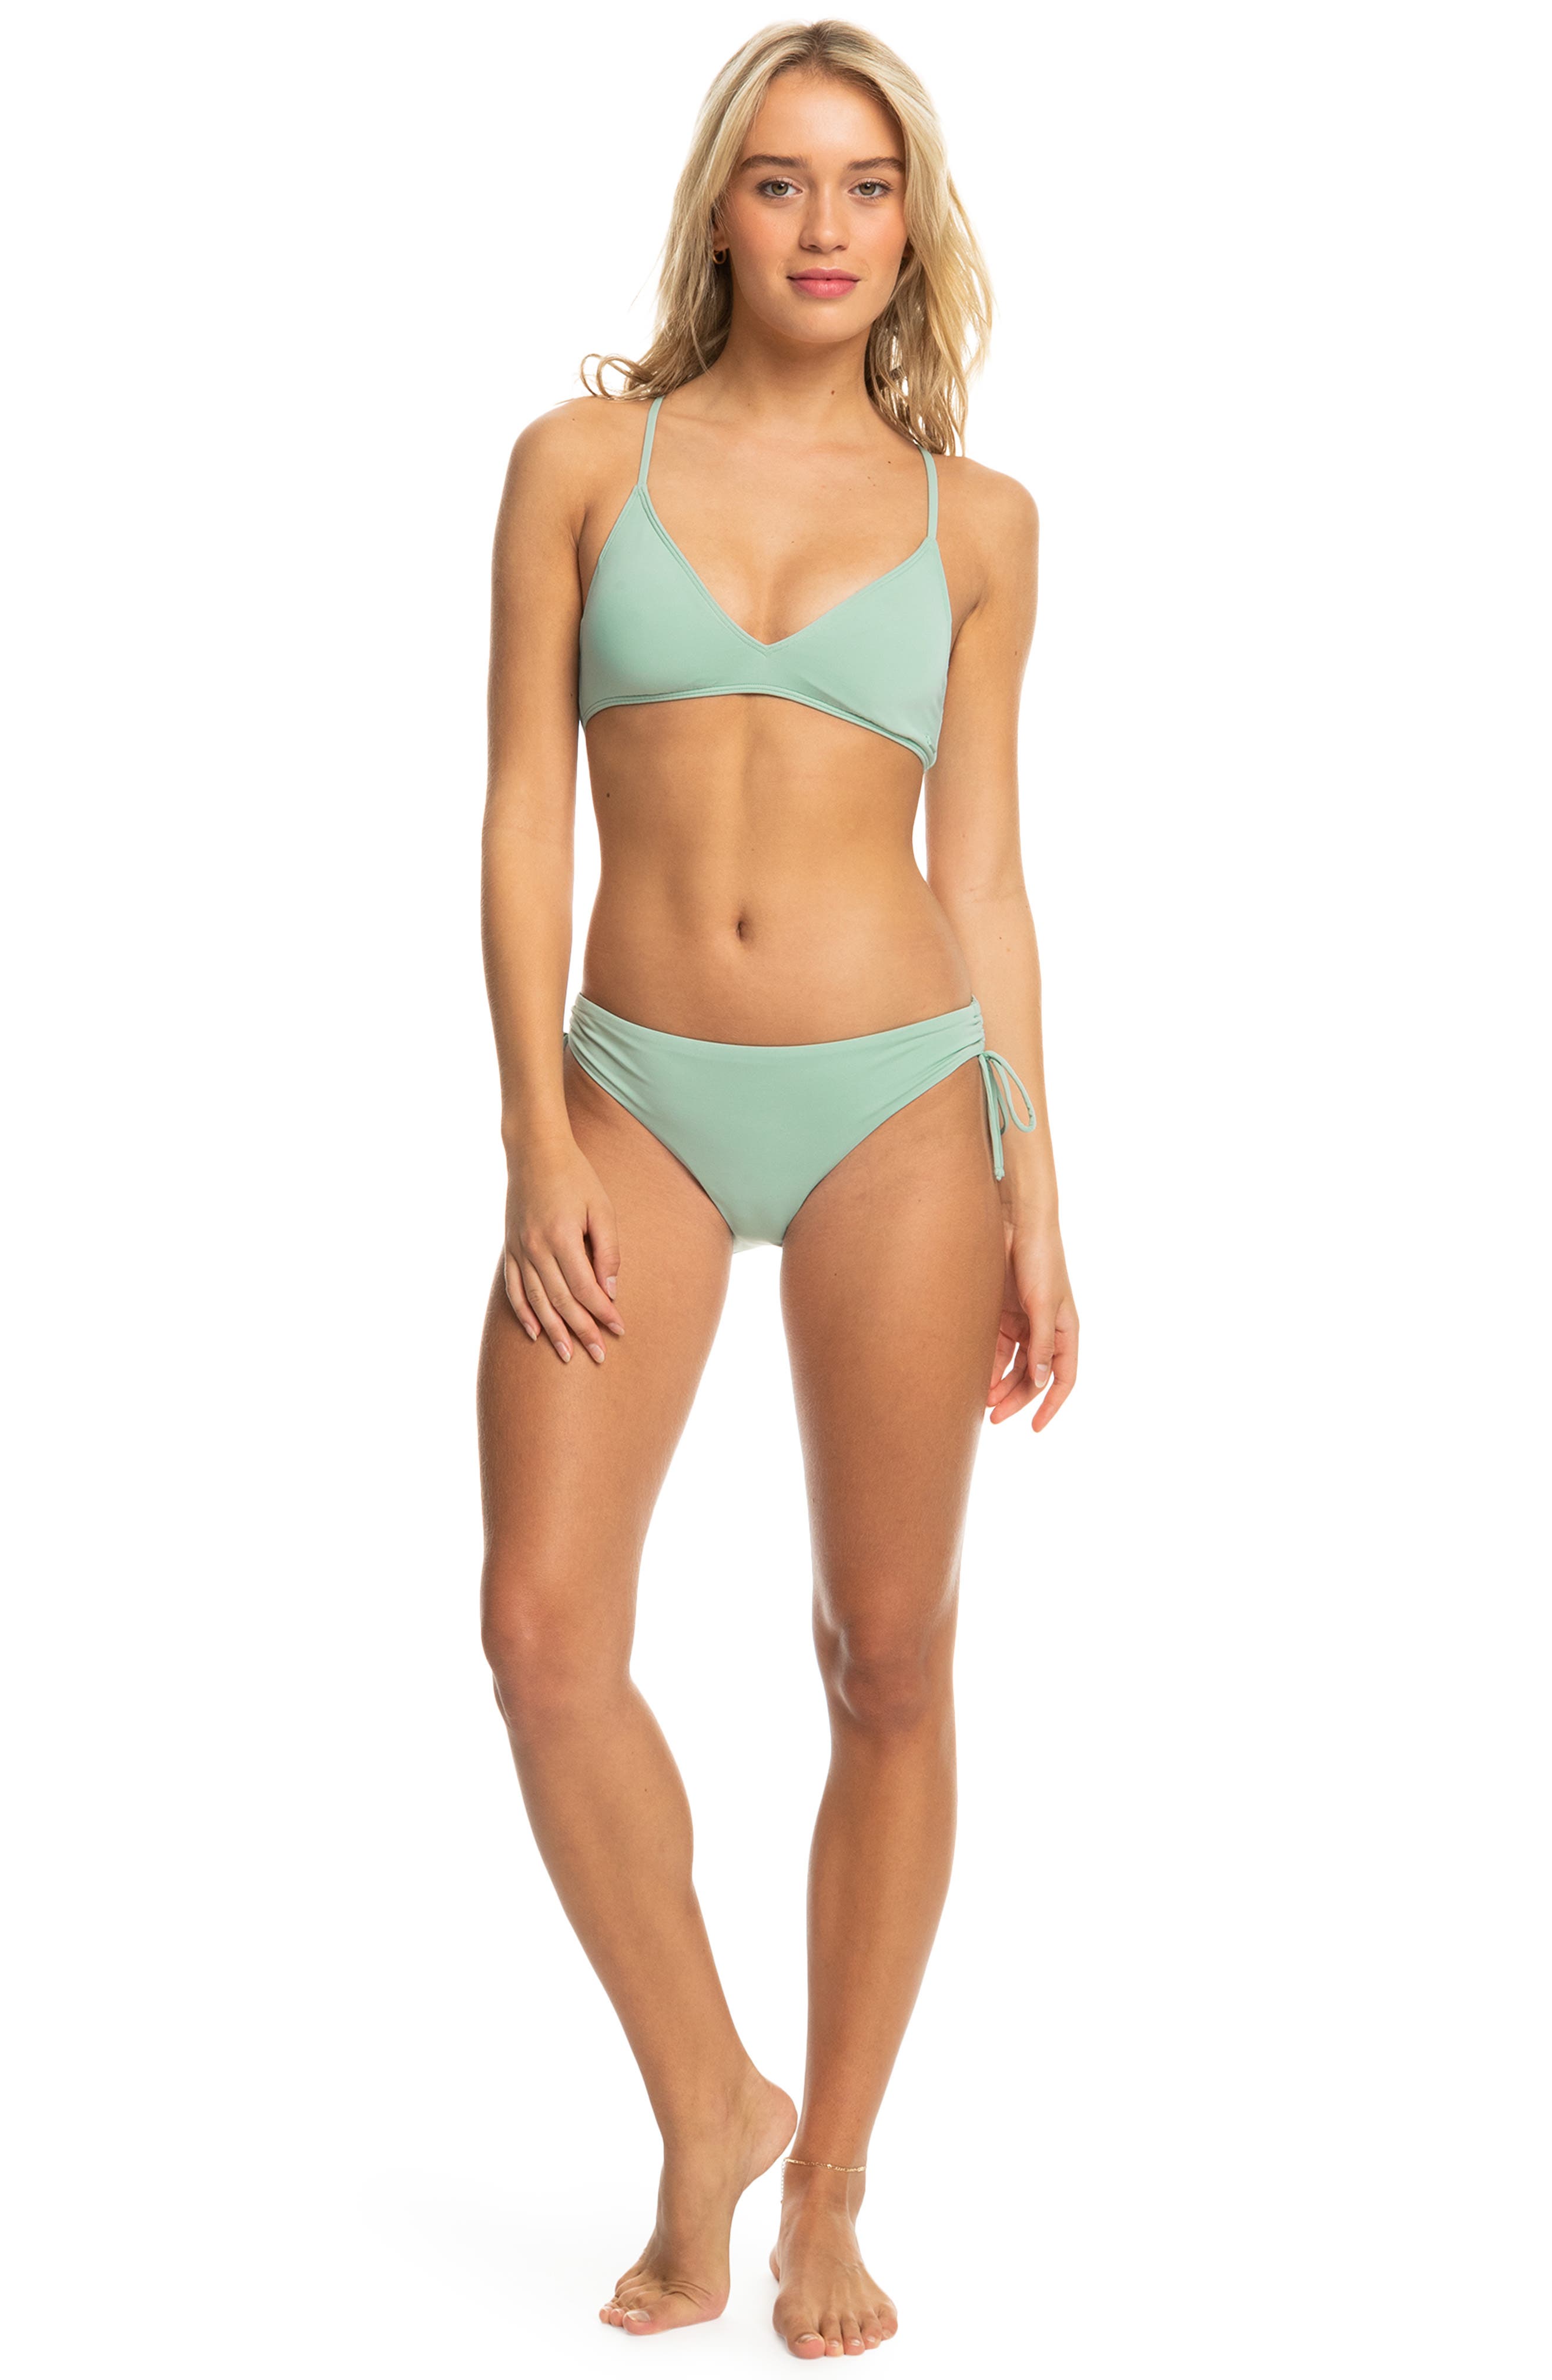 ROXY Aruba Bralette Bikini Top - Bright light blue